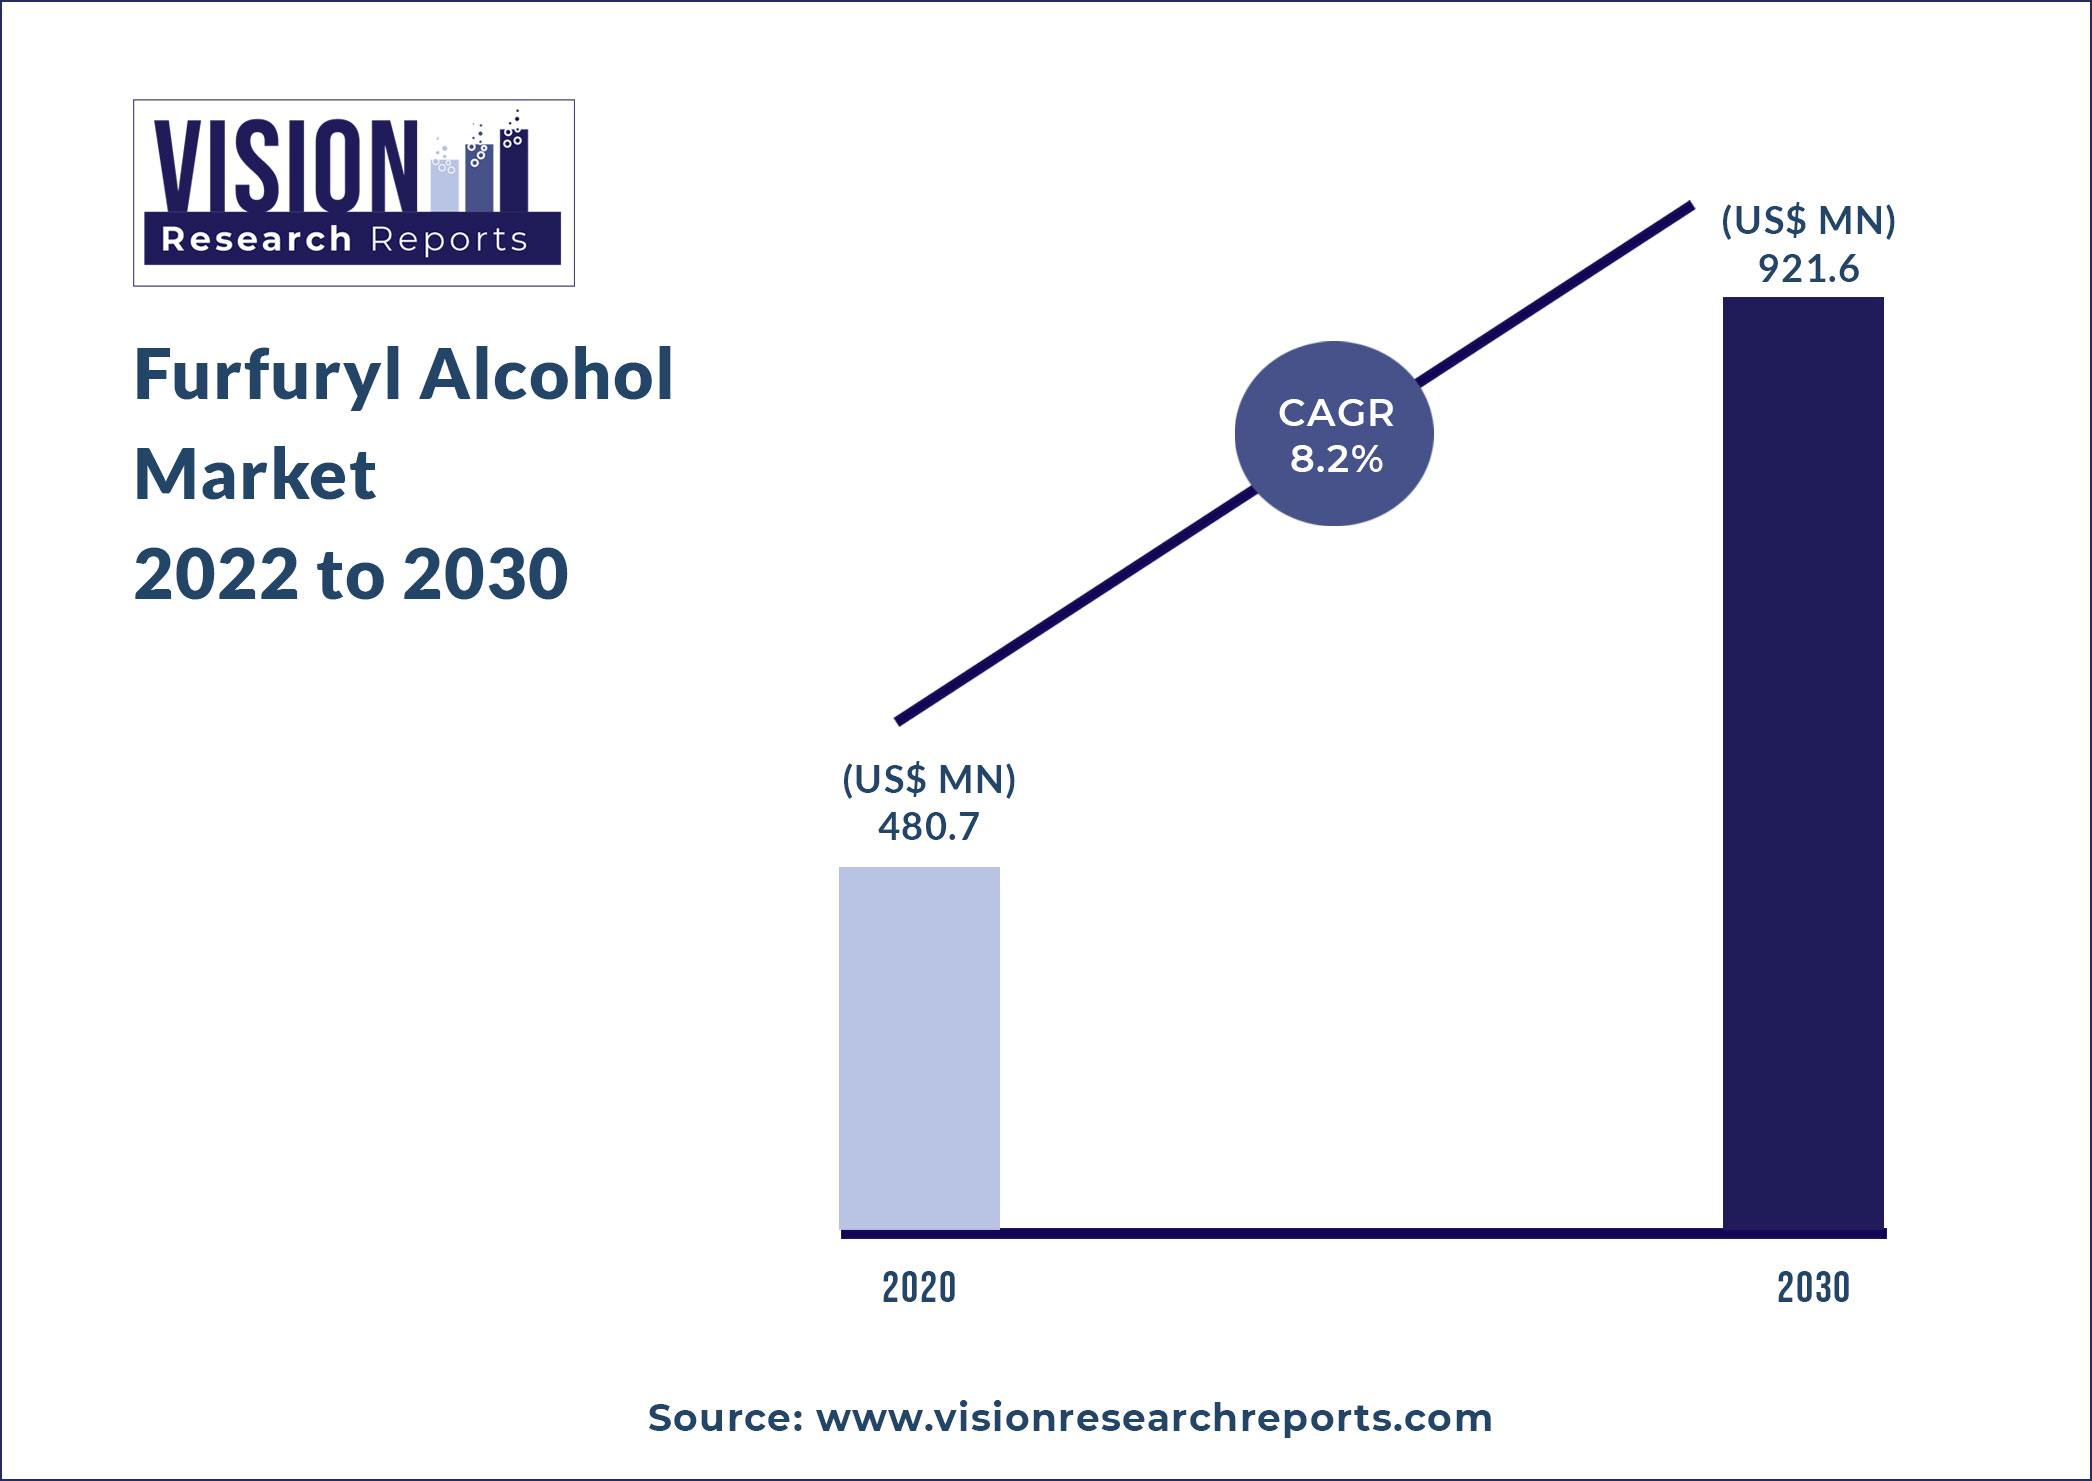 Furfuryl Alcohol Market Size 2022 to 2030